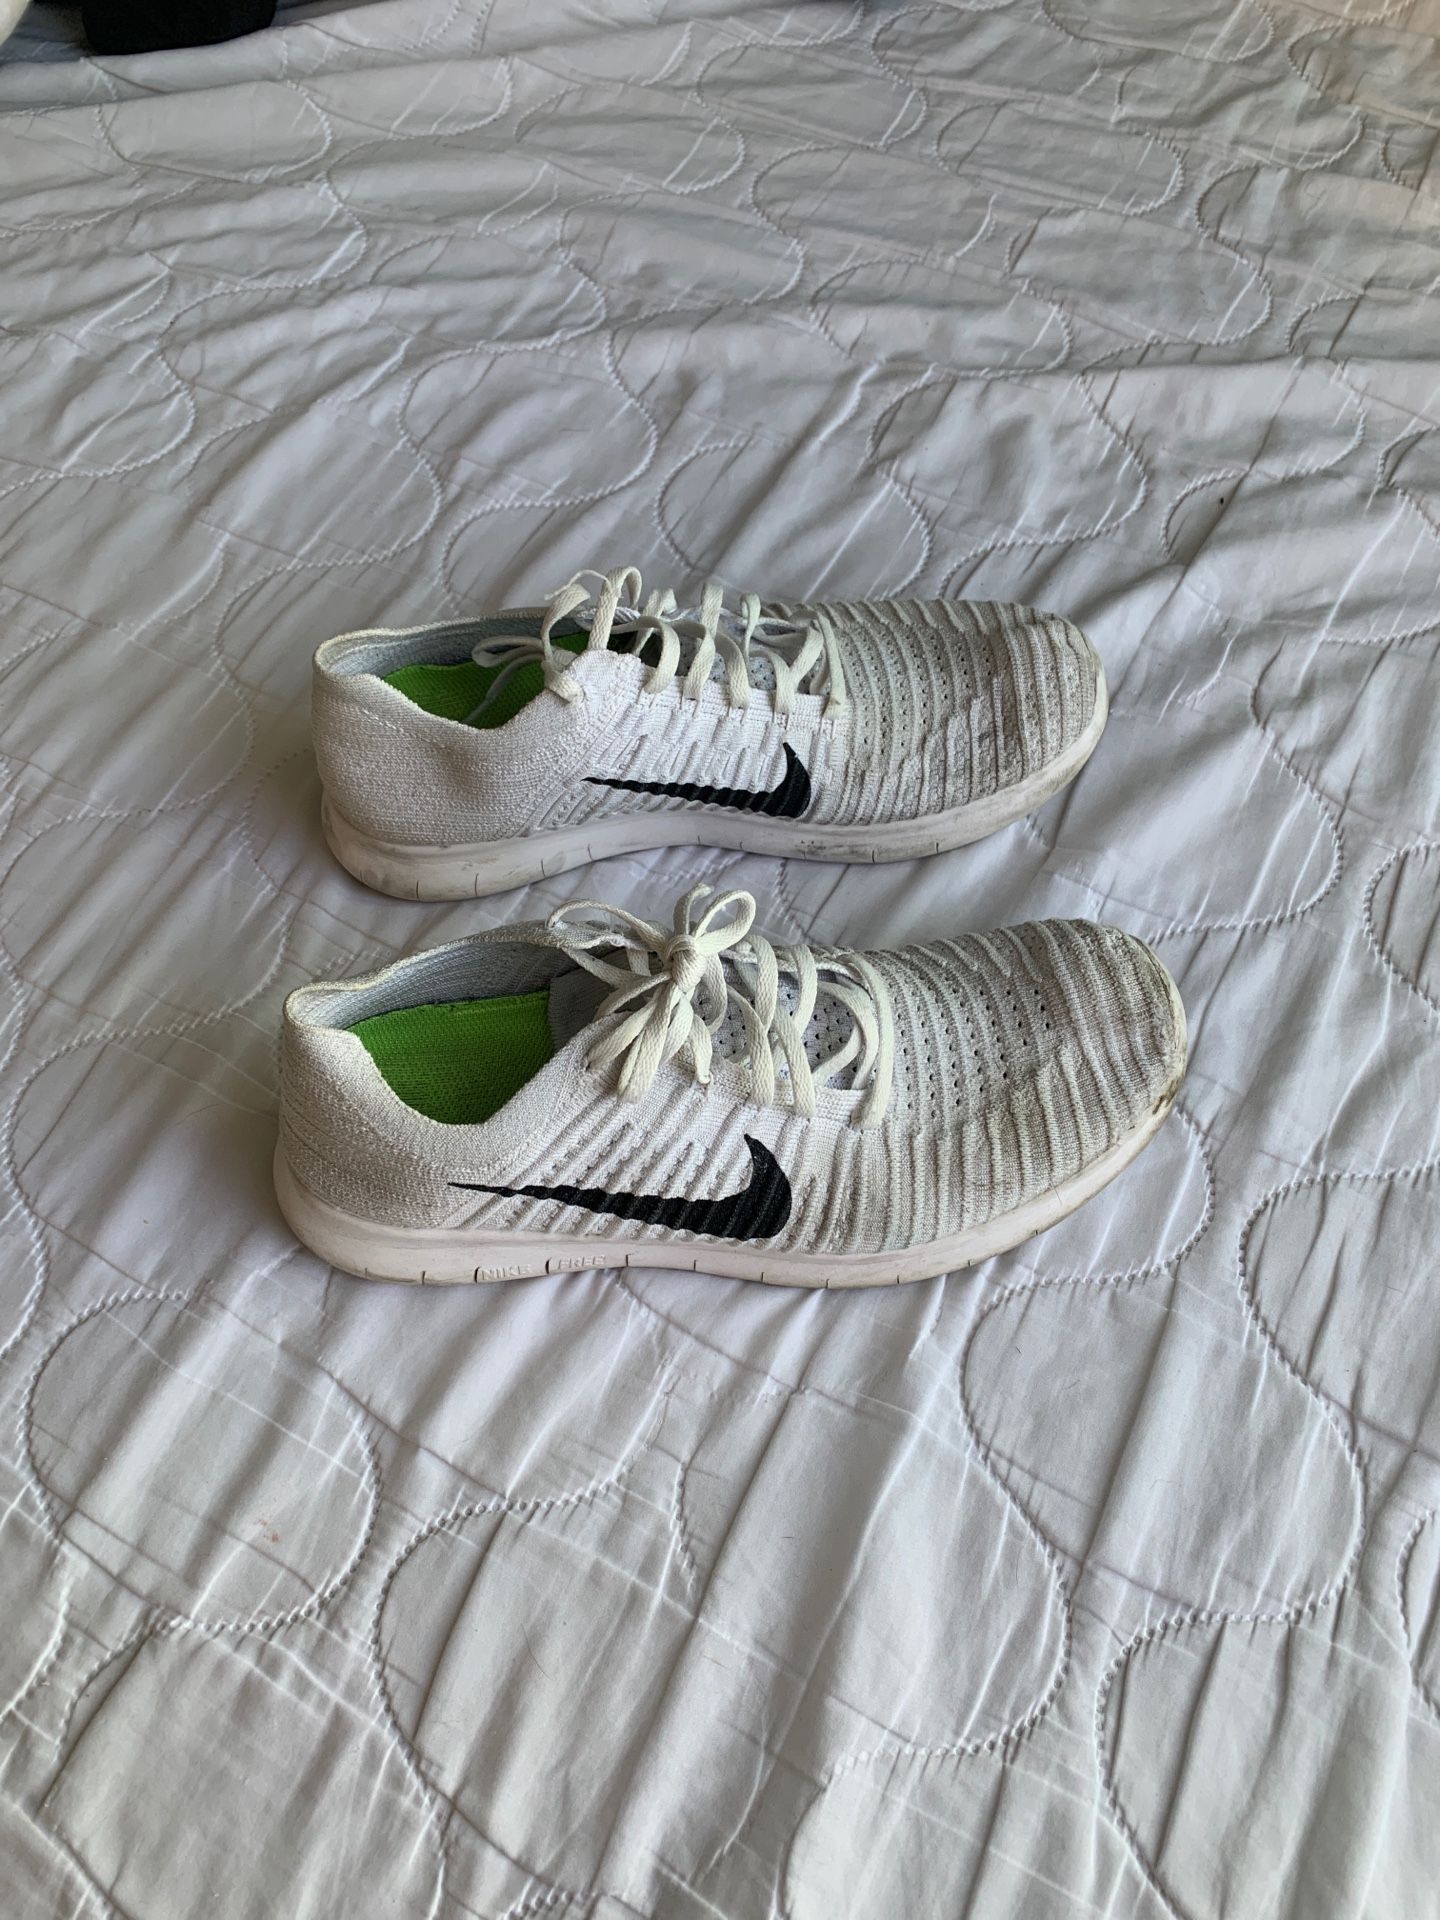 Men’s size 10 White Nike Free Run Flyknit running shoes